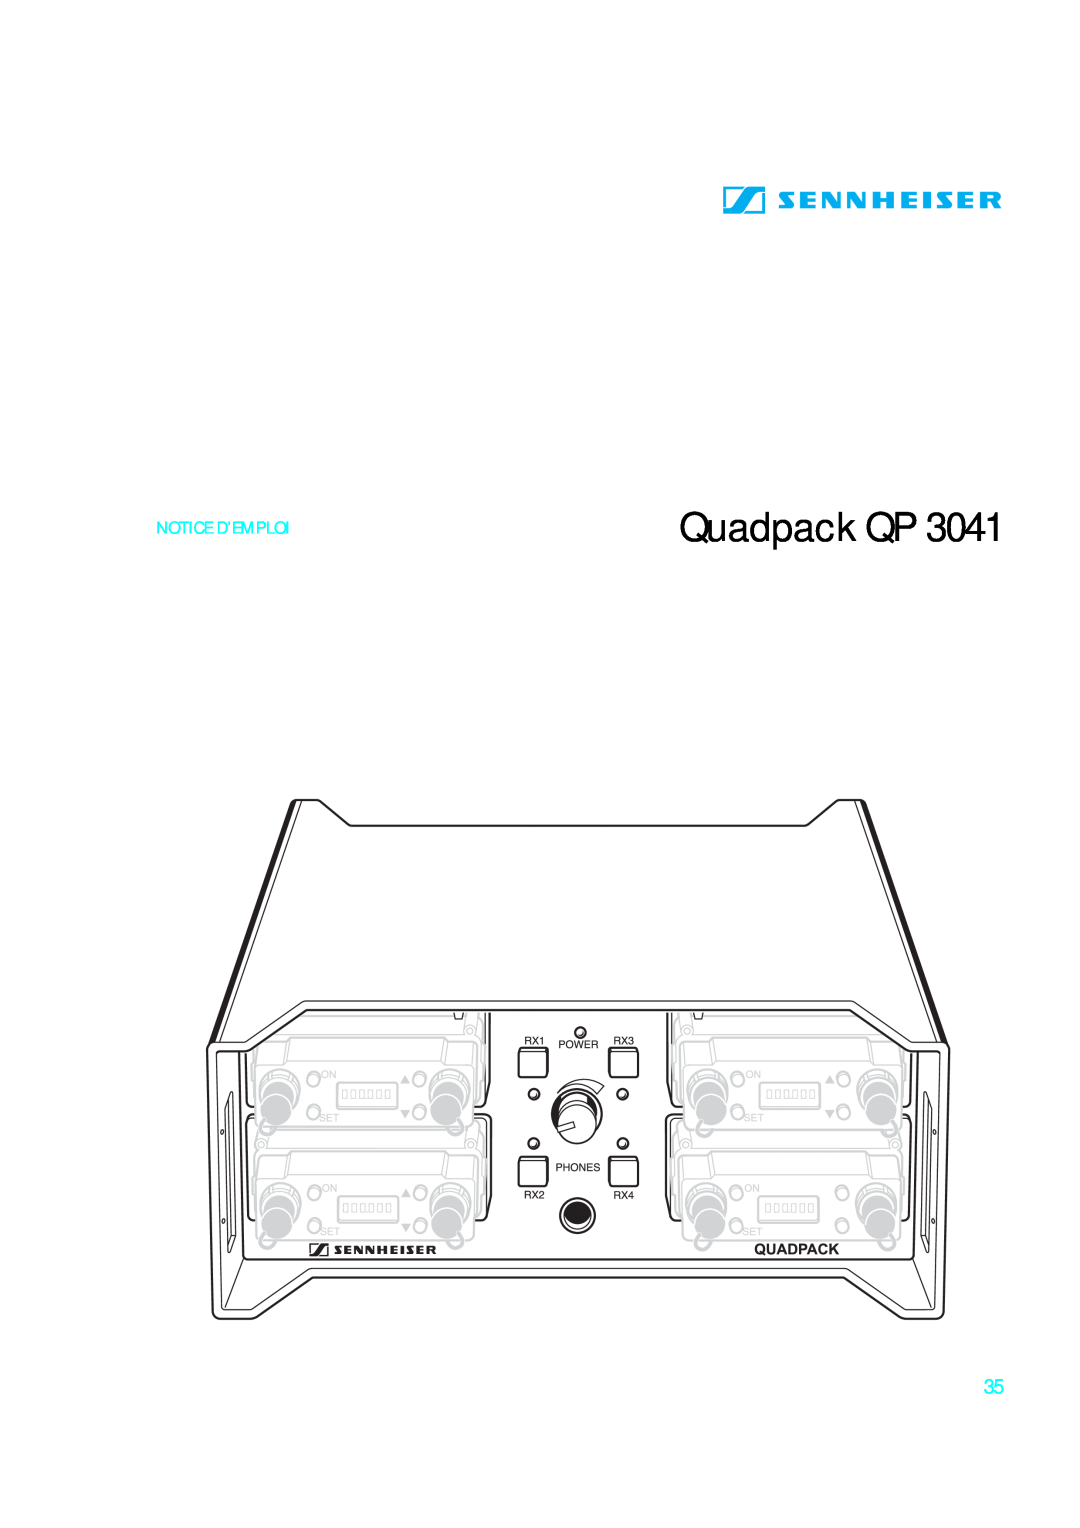 Sennheiser qp 3041 instruction manual Notice D’Emploi, Quadpack QP 